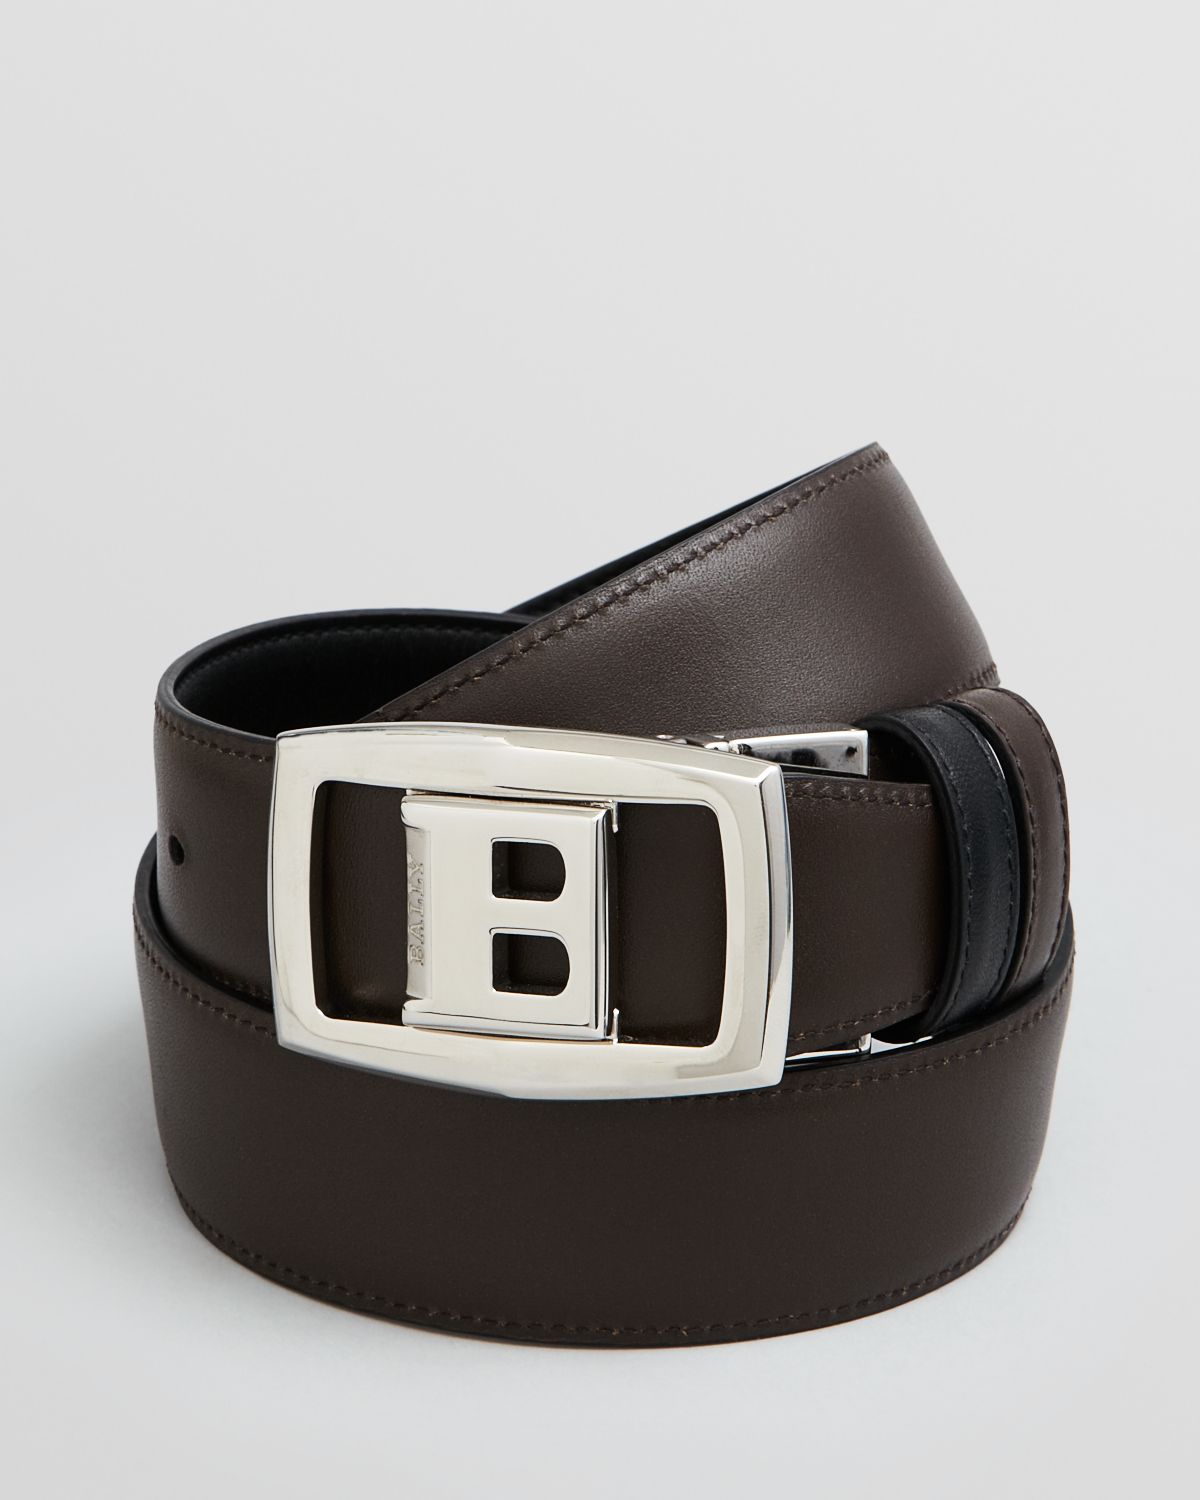 Bally Baldek Buckle Reversible Leather Belt in Black/Brown (Brown) for Men - Lyst